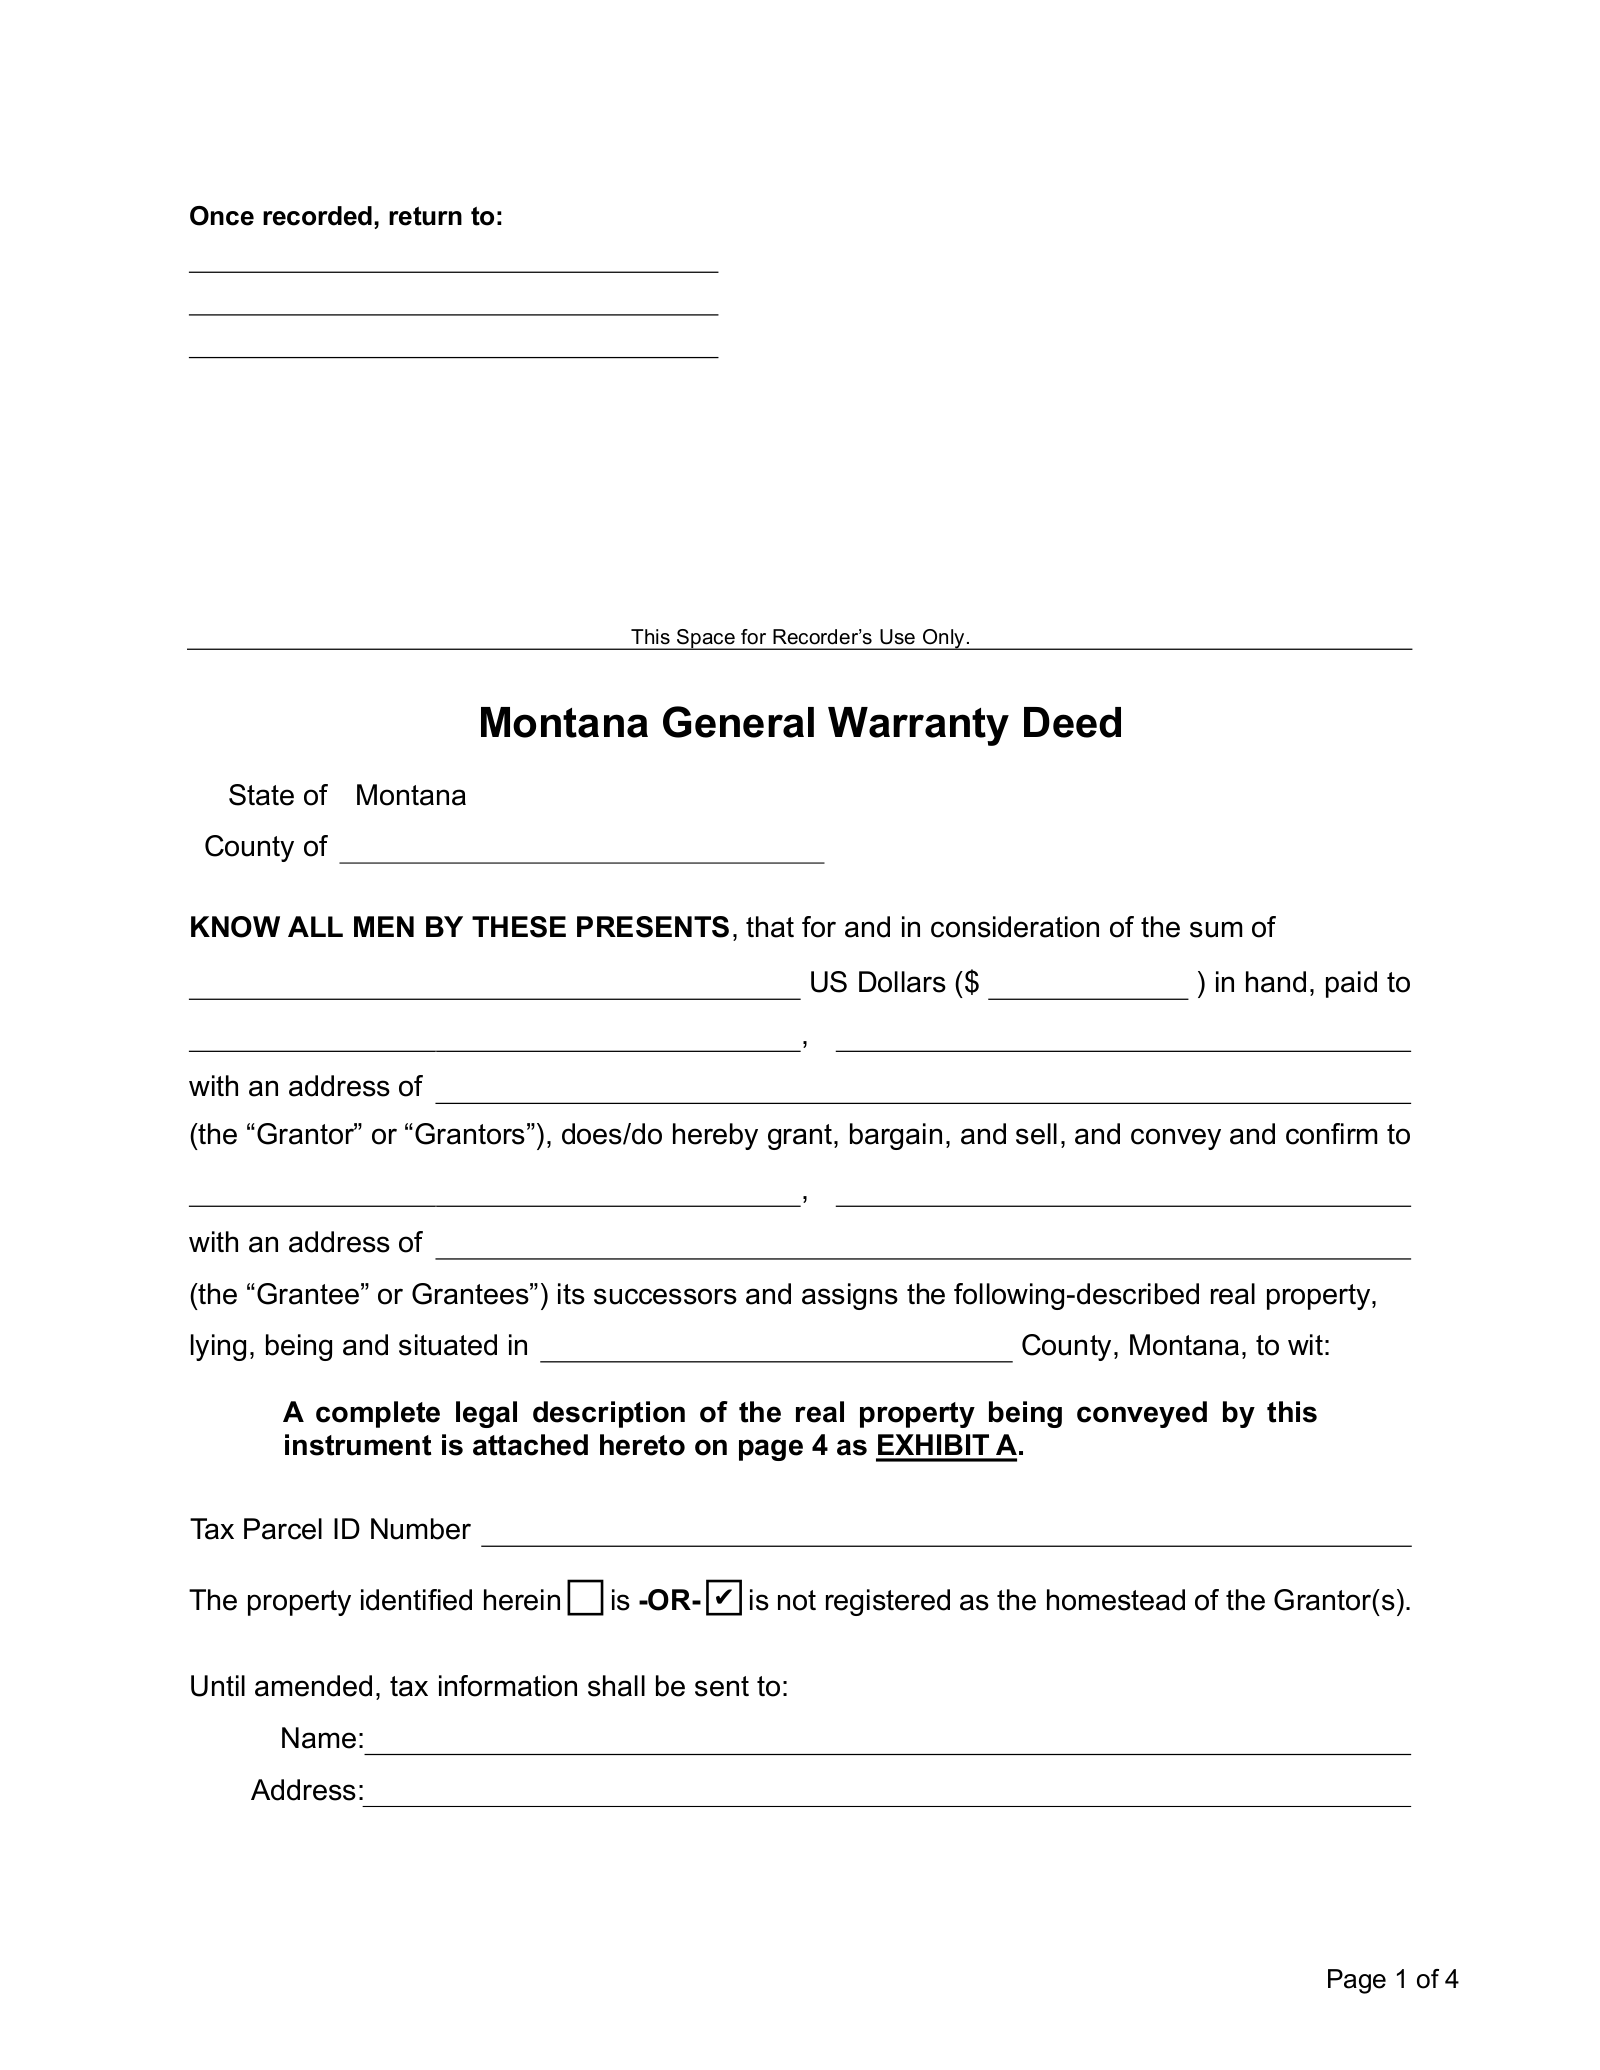 free-montana-general-warranty-deed-form-pdf-word-eforms